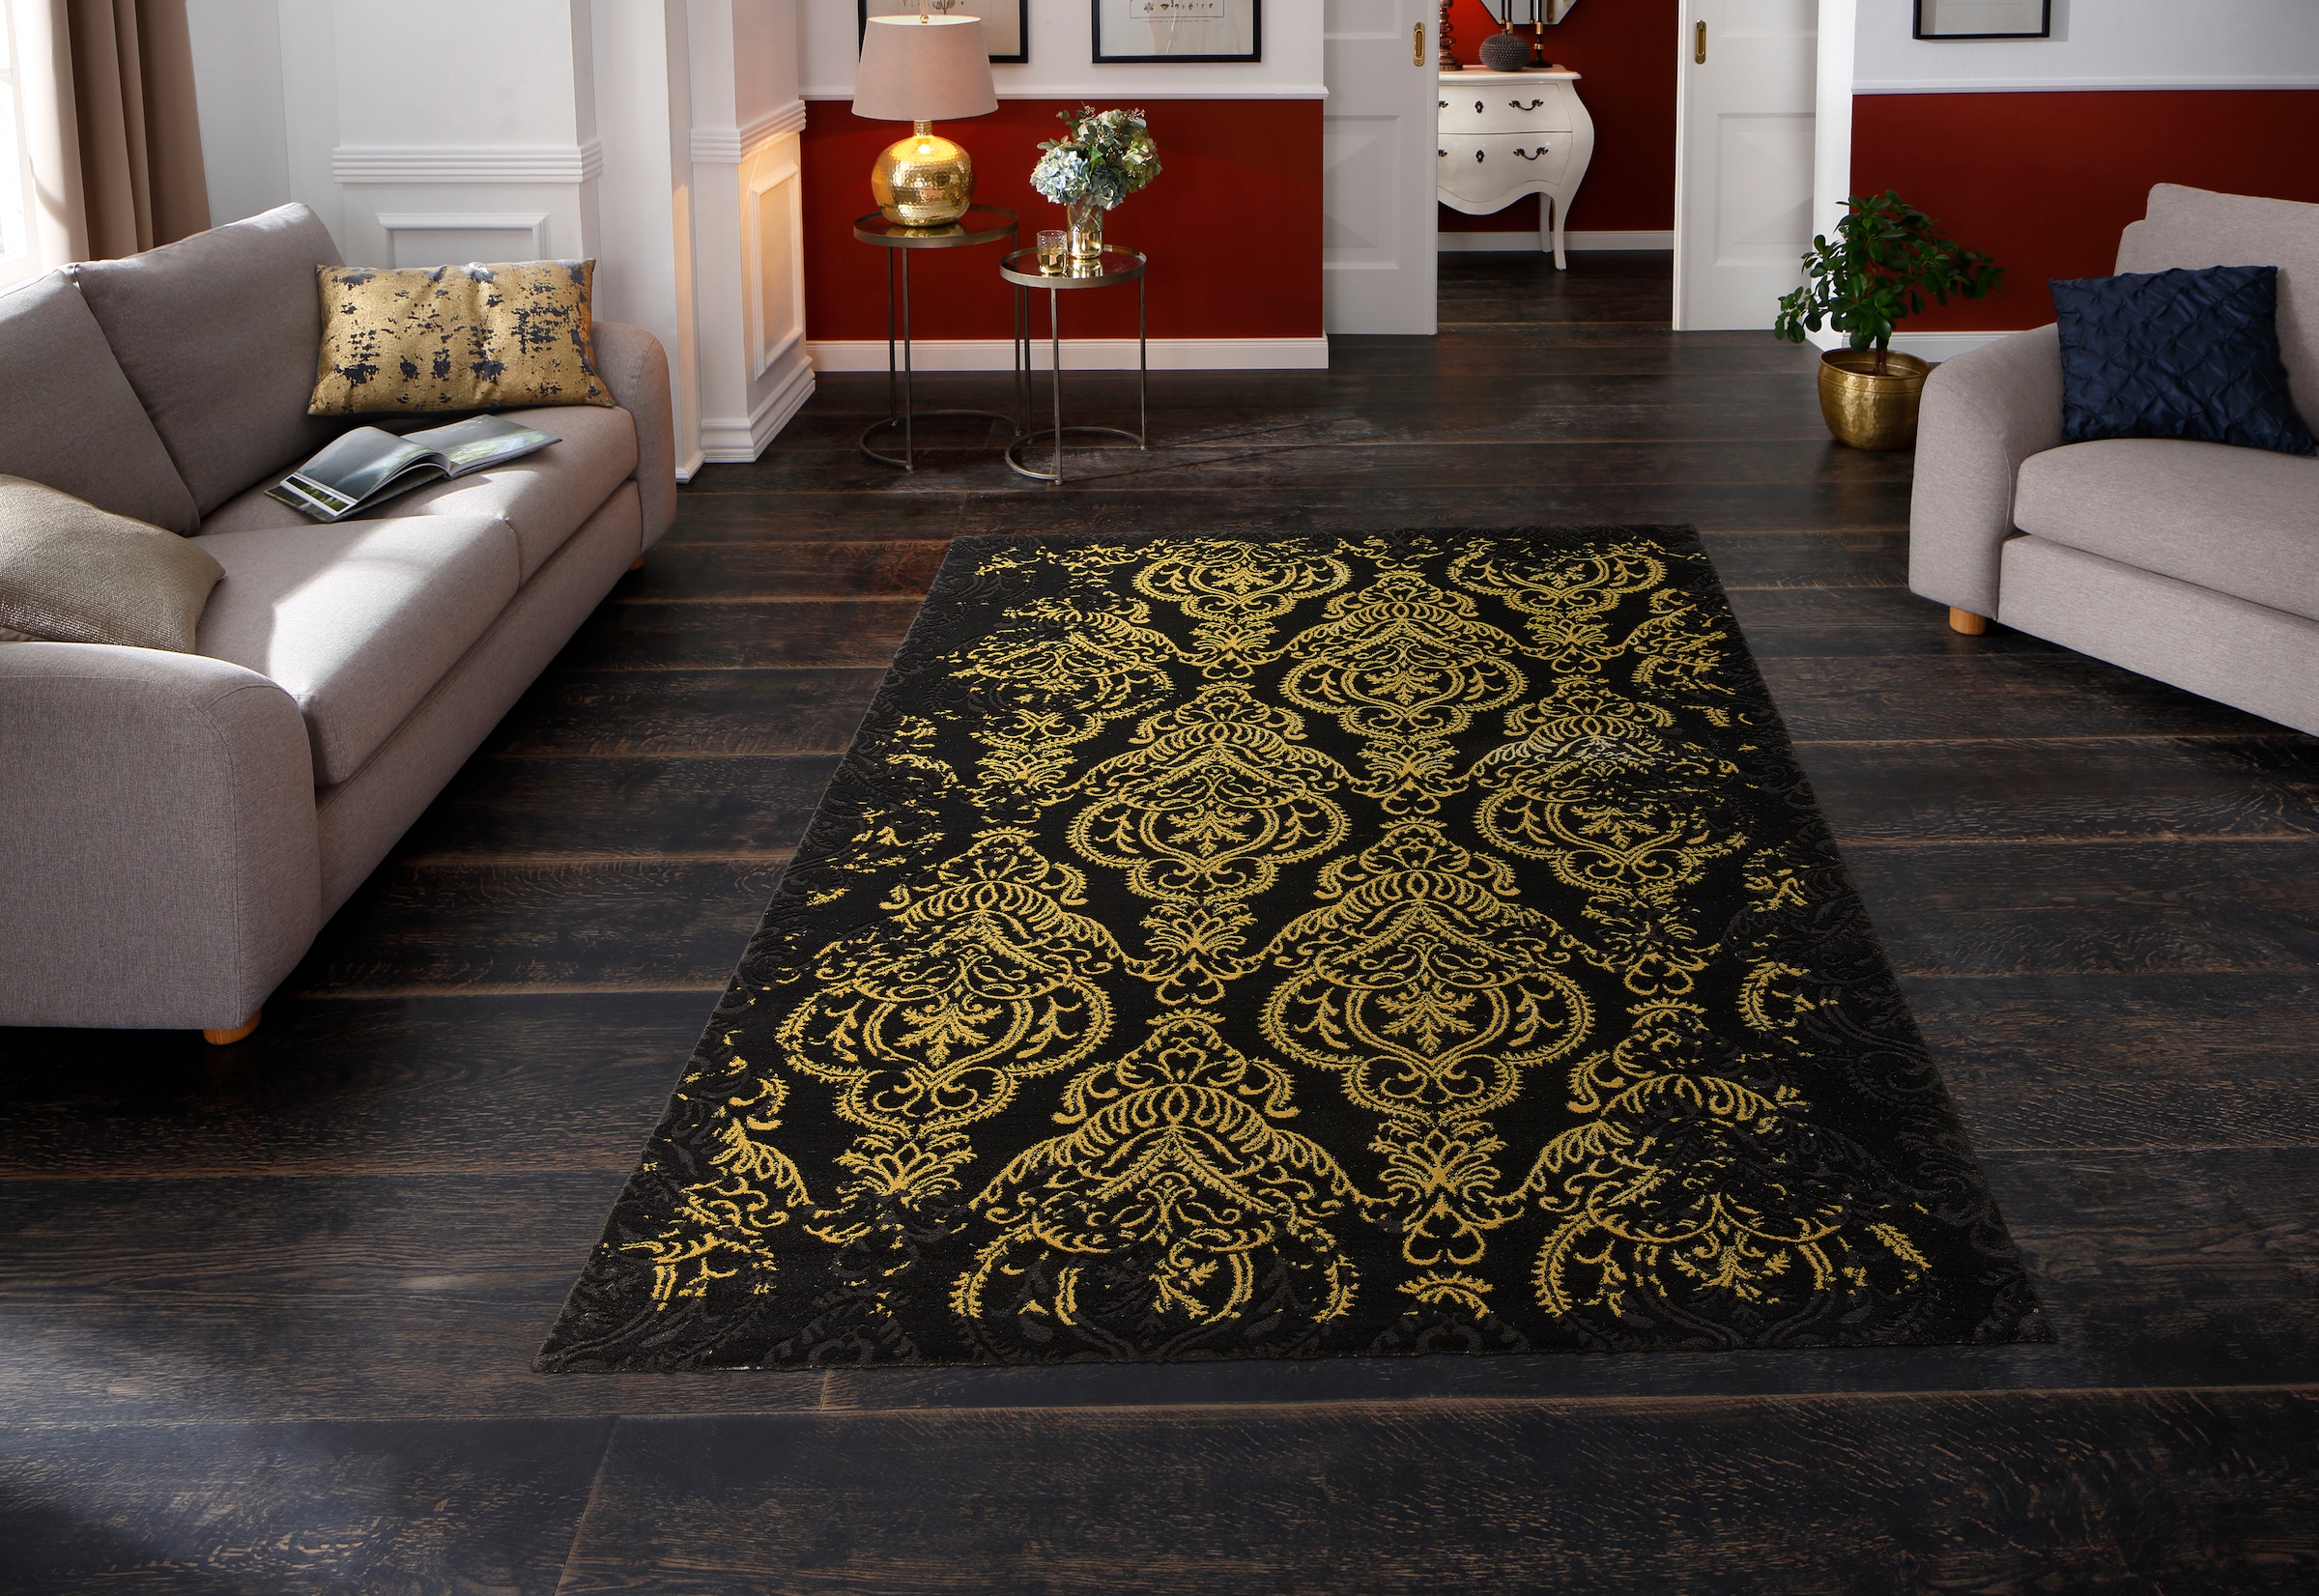 Teppich mit ornamentalem Muster